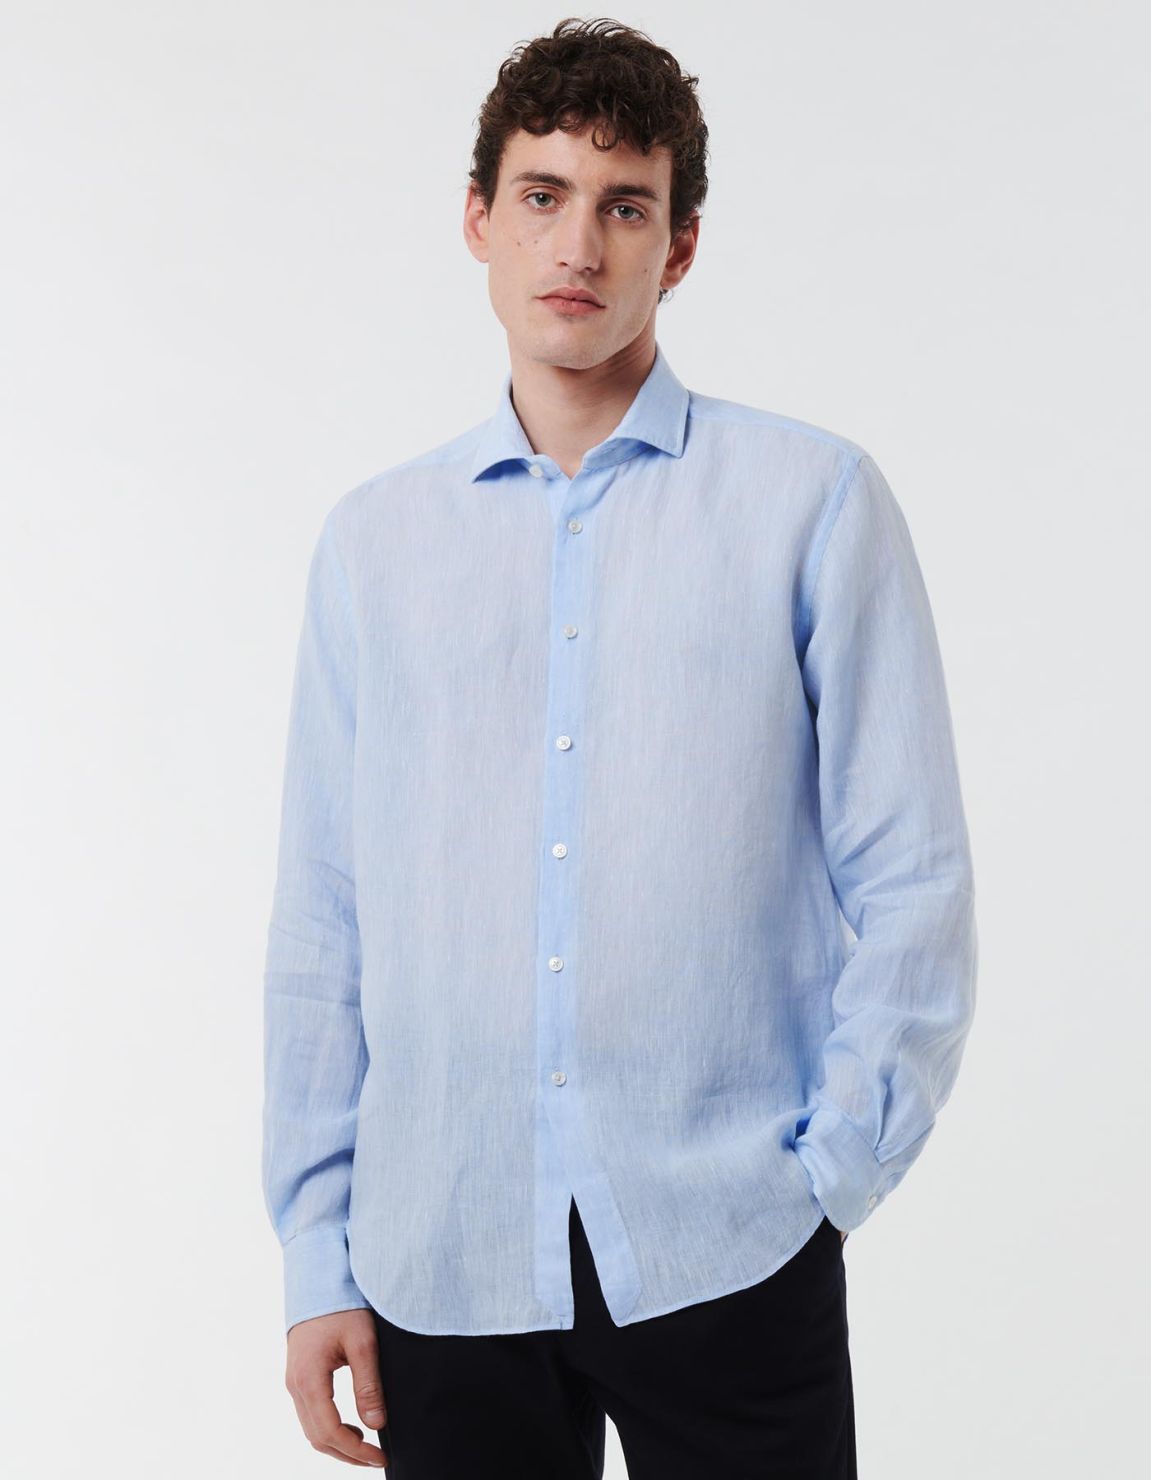 Light Blue Linen Solid colour Shirt Collar open spread Evolution Classic Fit 3